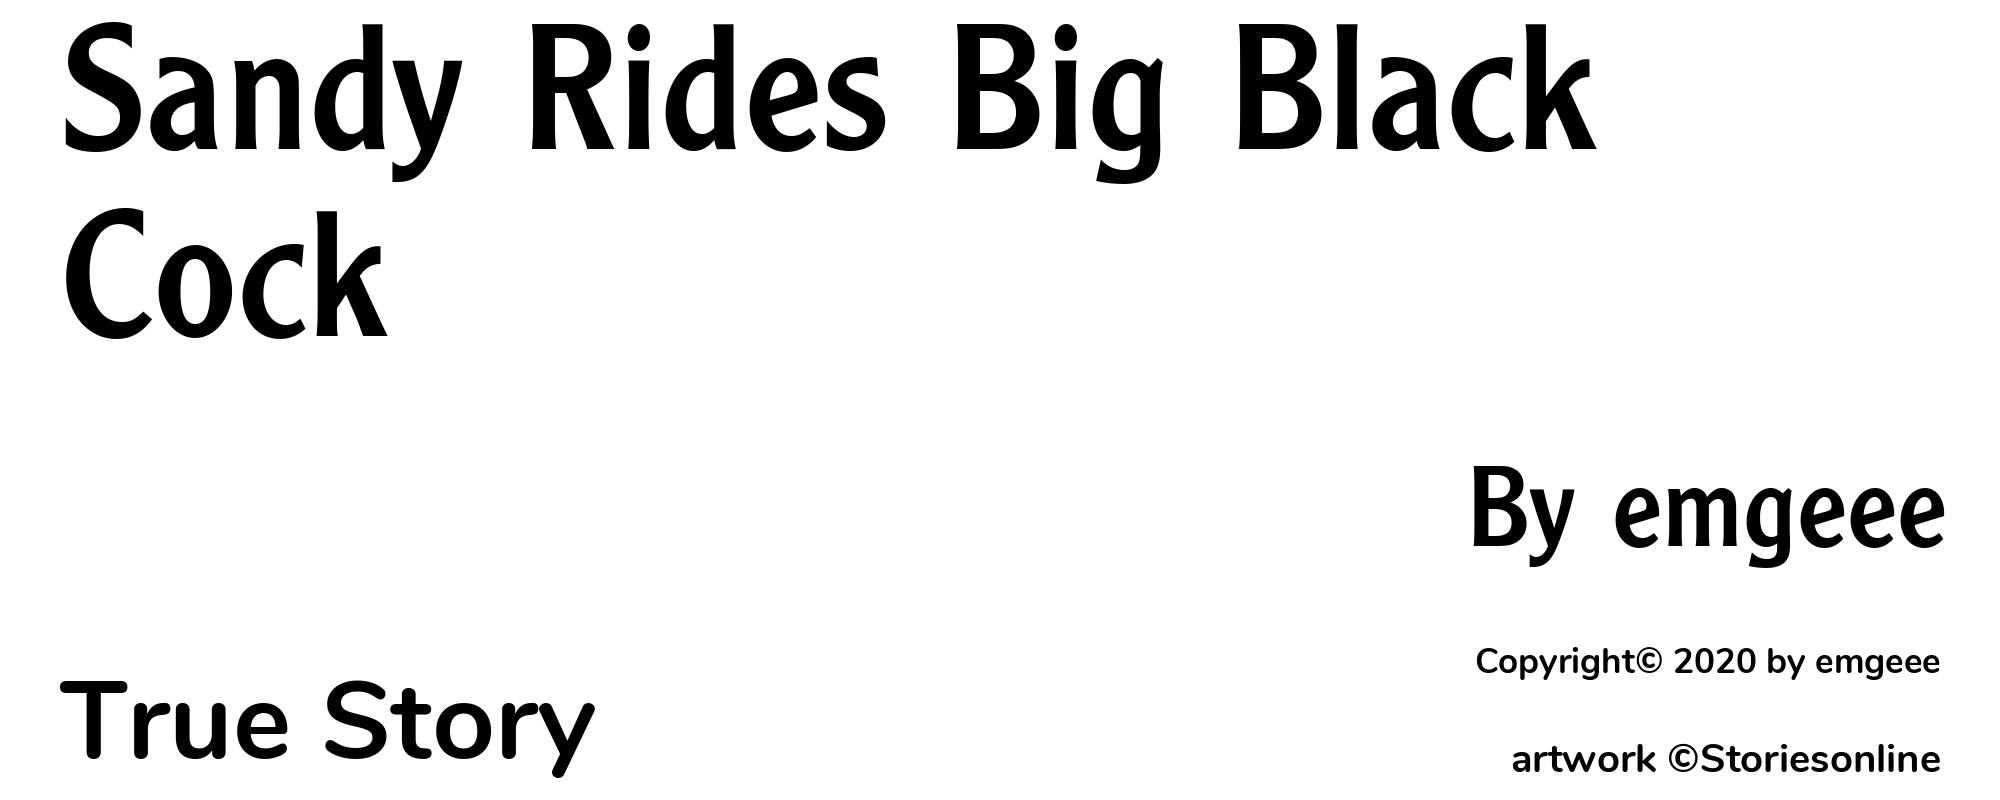 Sandy Rides Big Black Cock - Cover